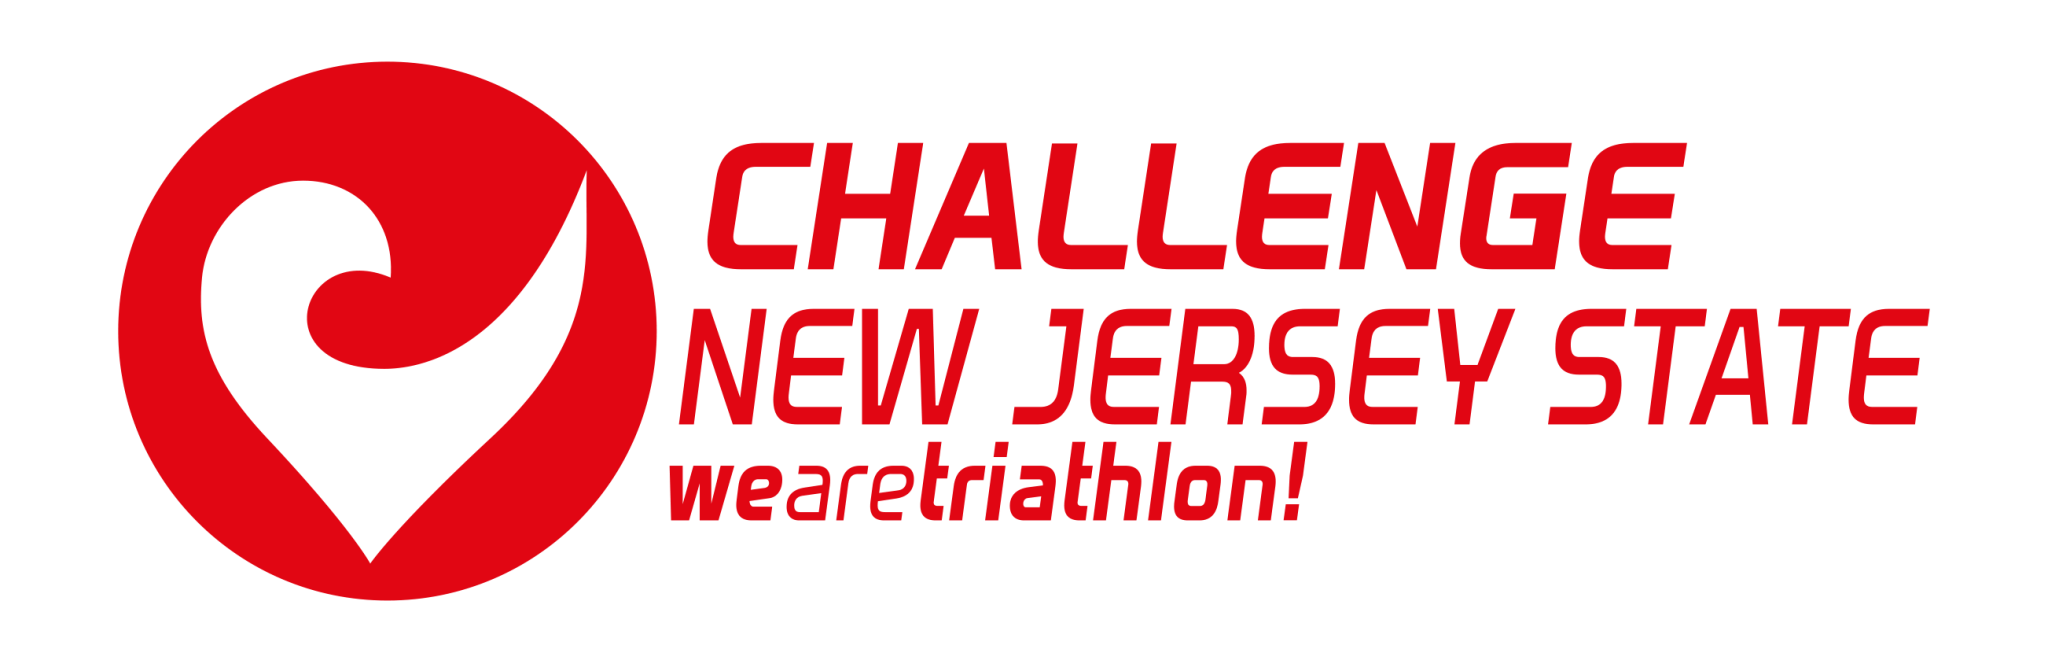 We are triathlon! New Jersey State Triathlon is now Challenge New Jersey State